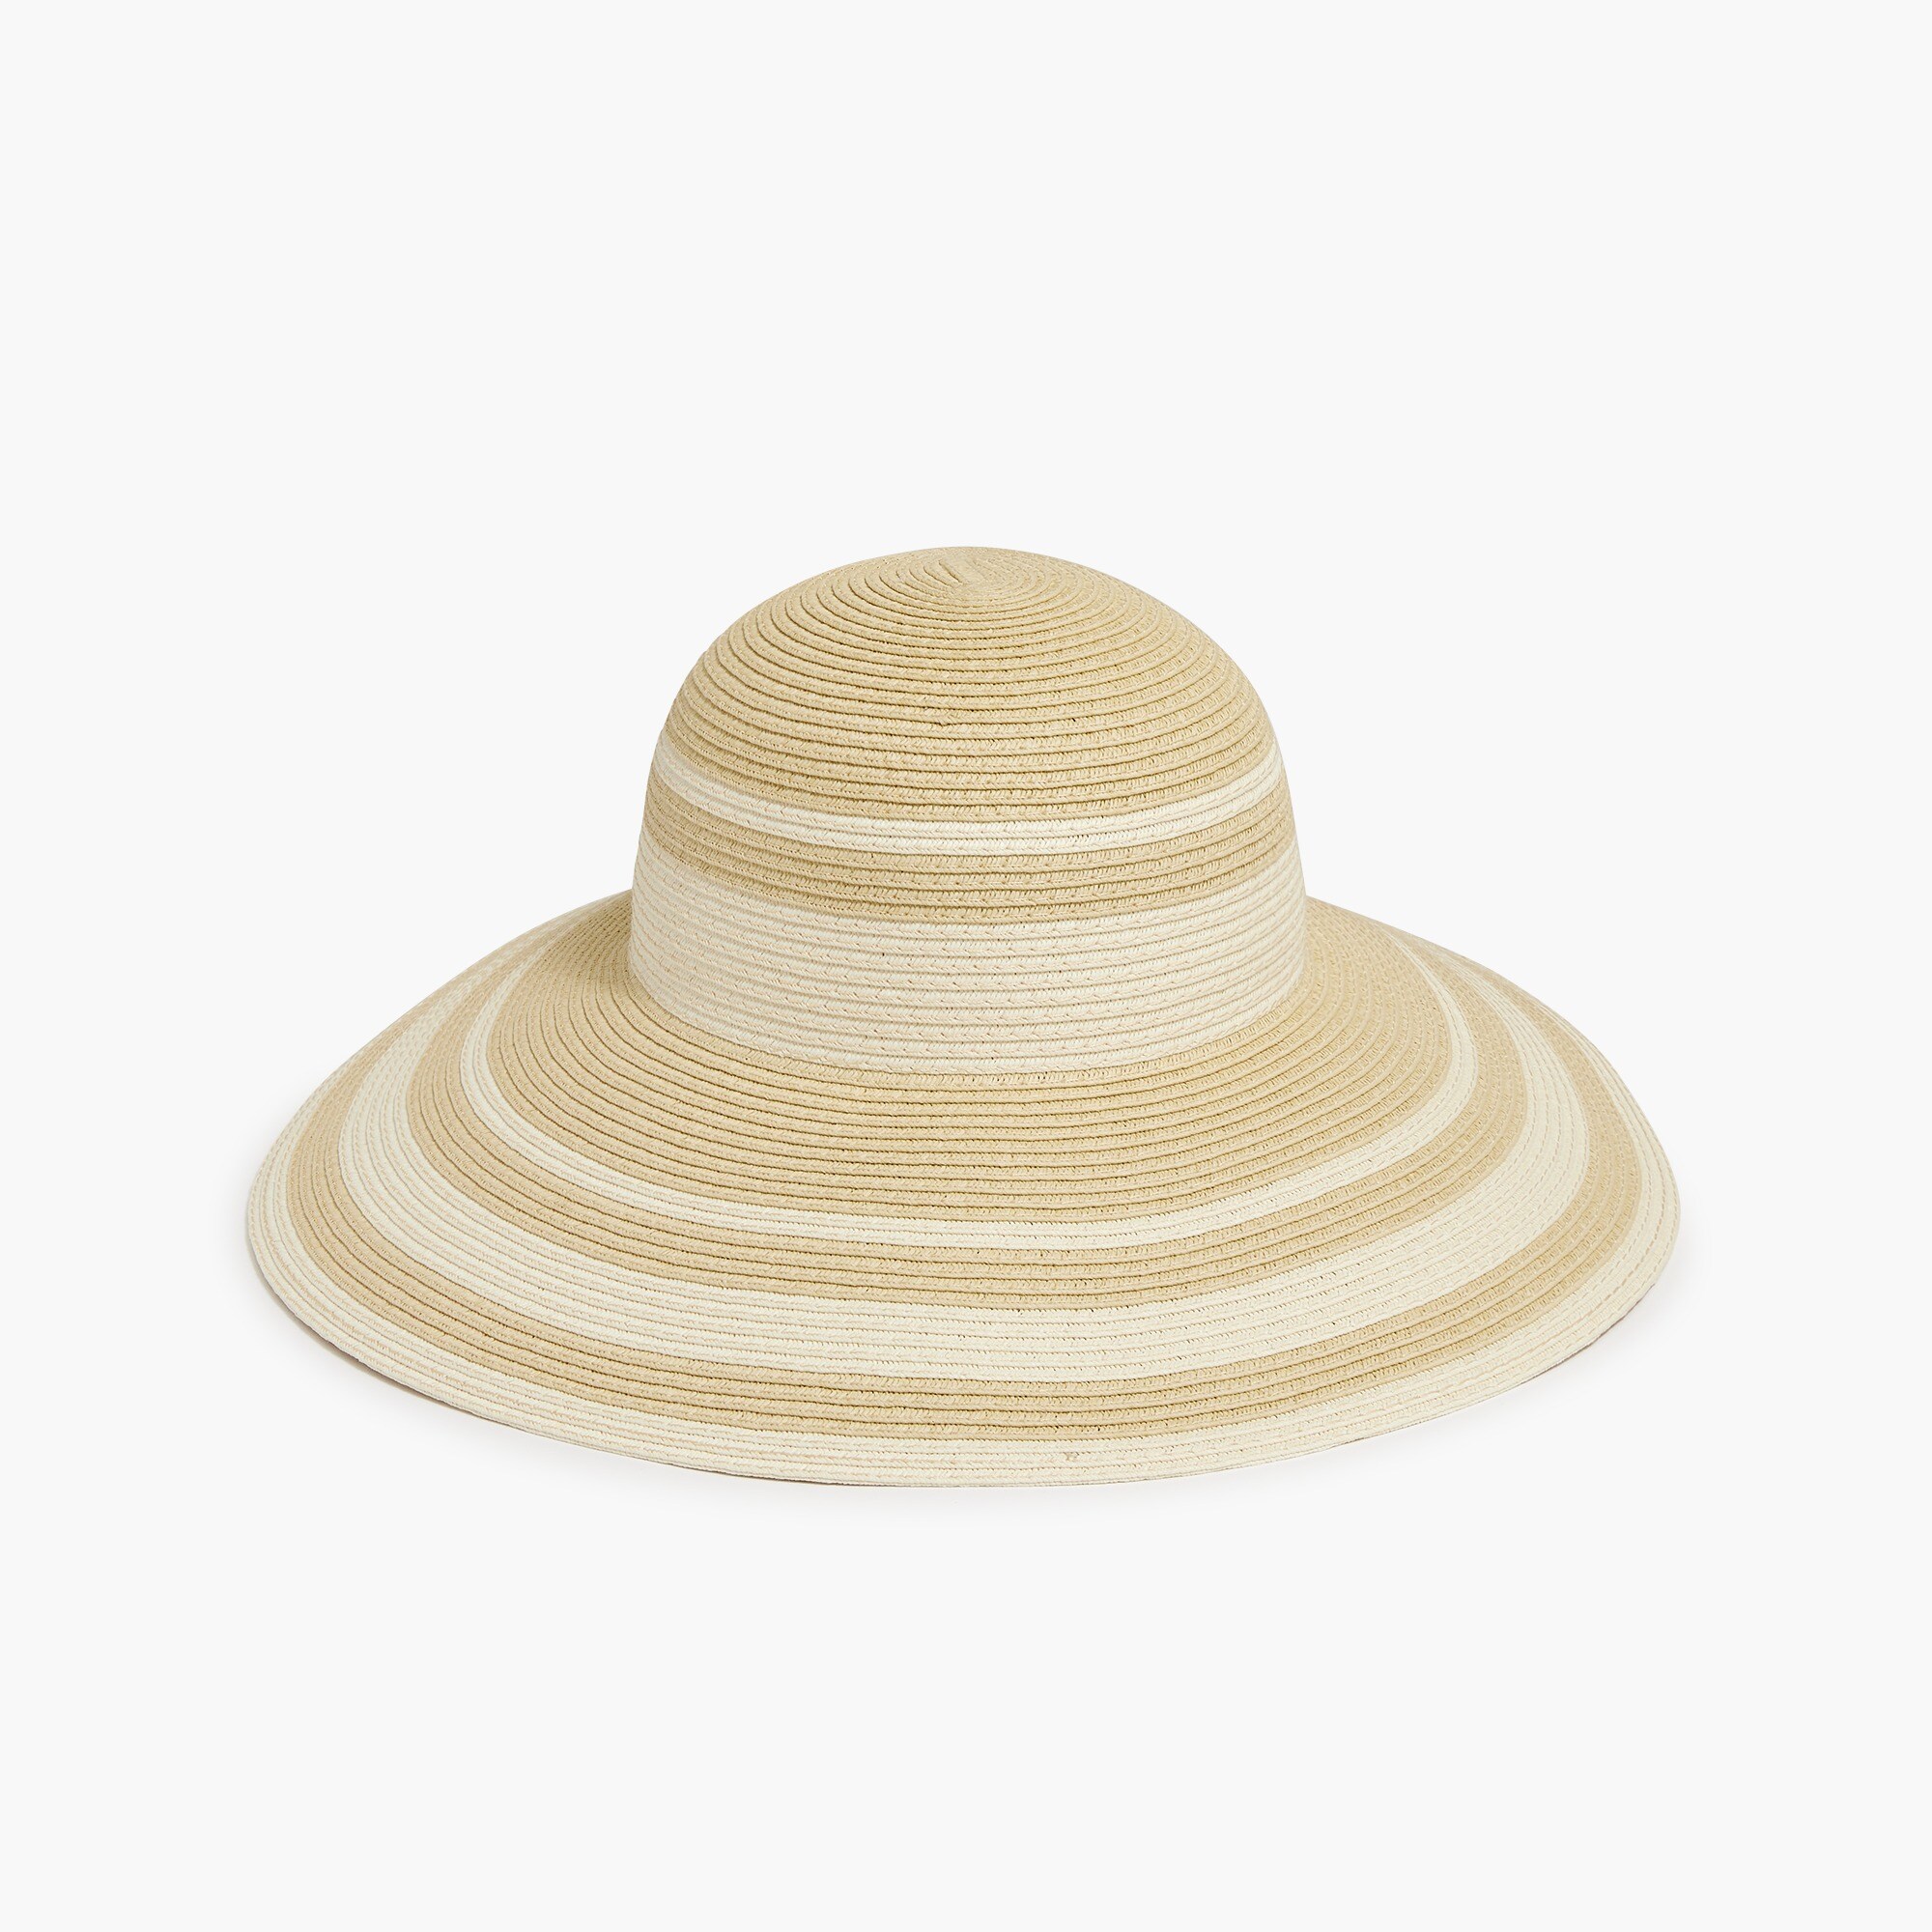  Striped straw floppy hat